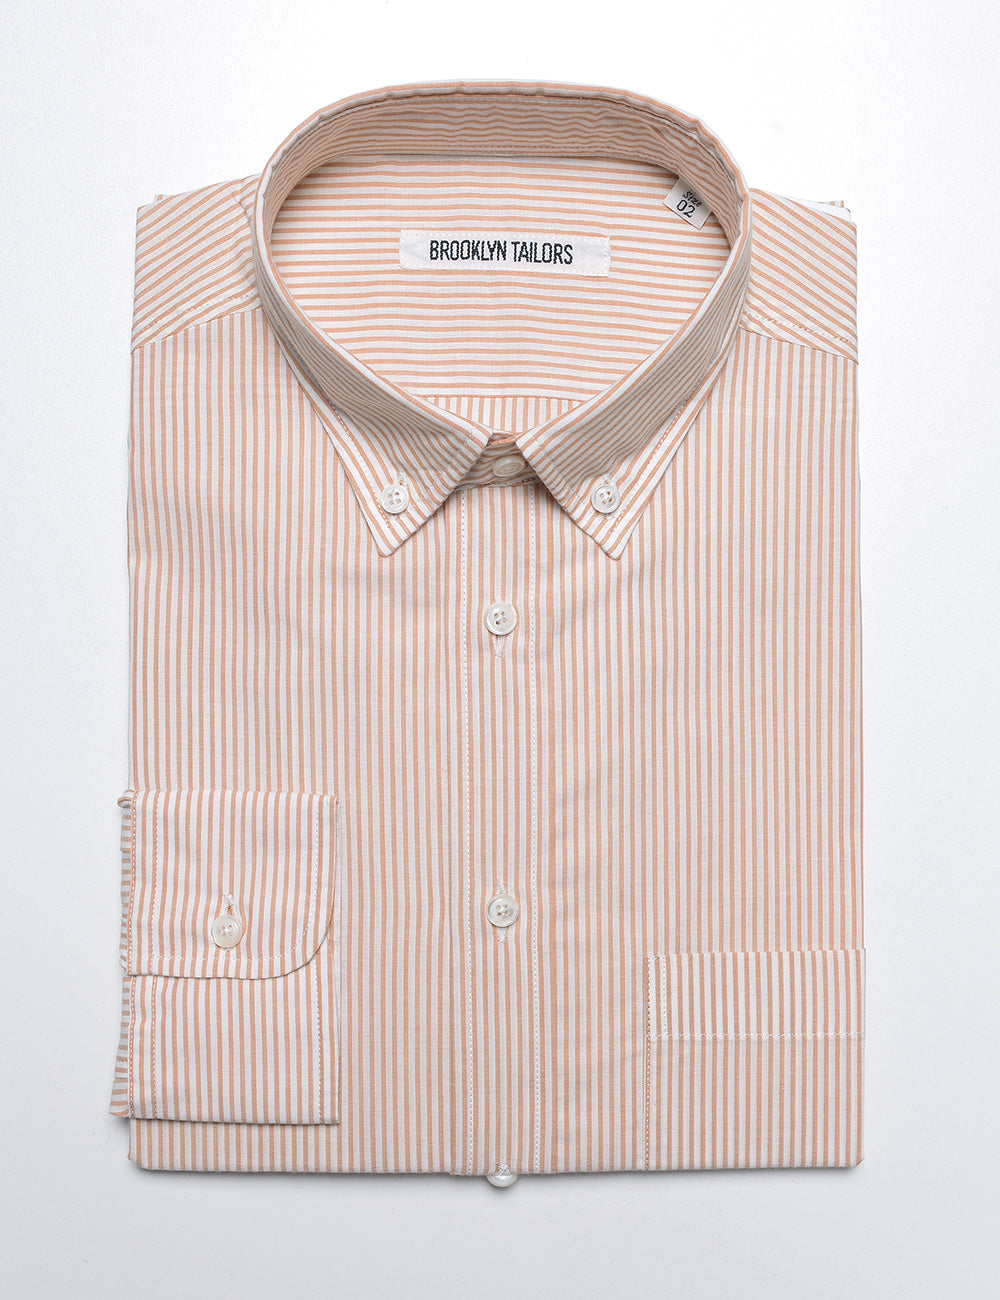 Brooklyn Tailors BKT10 Slim Casual Shirt in Thin Stripe - Ochre and White flat folded shot